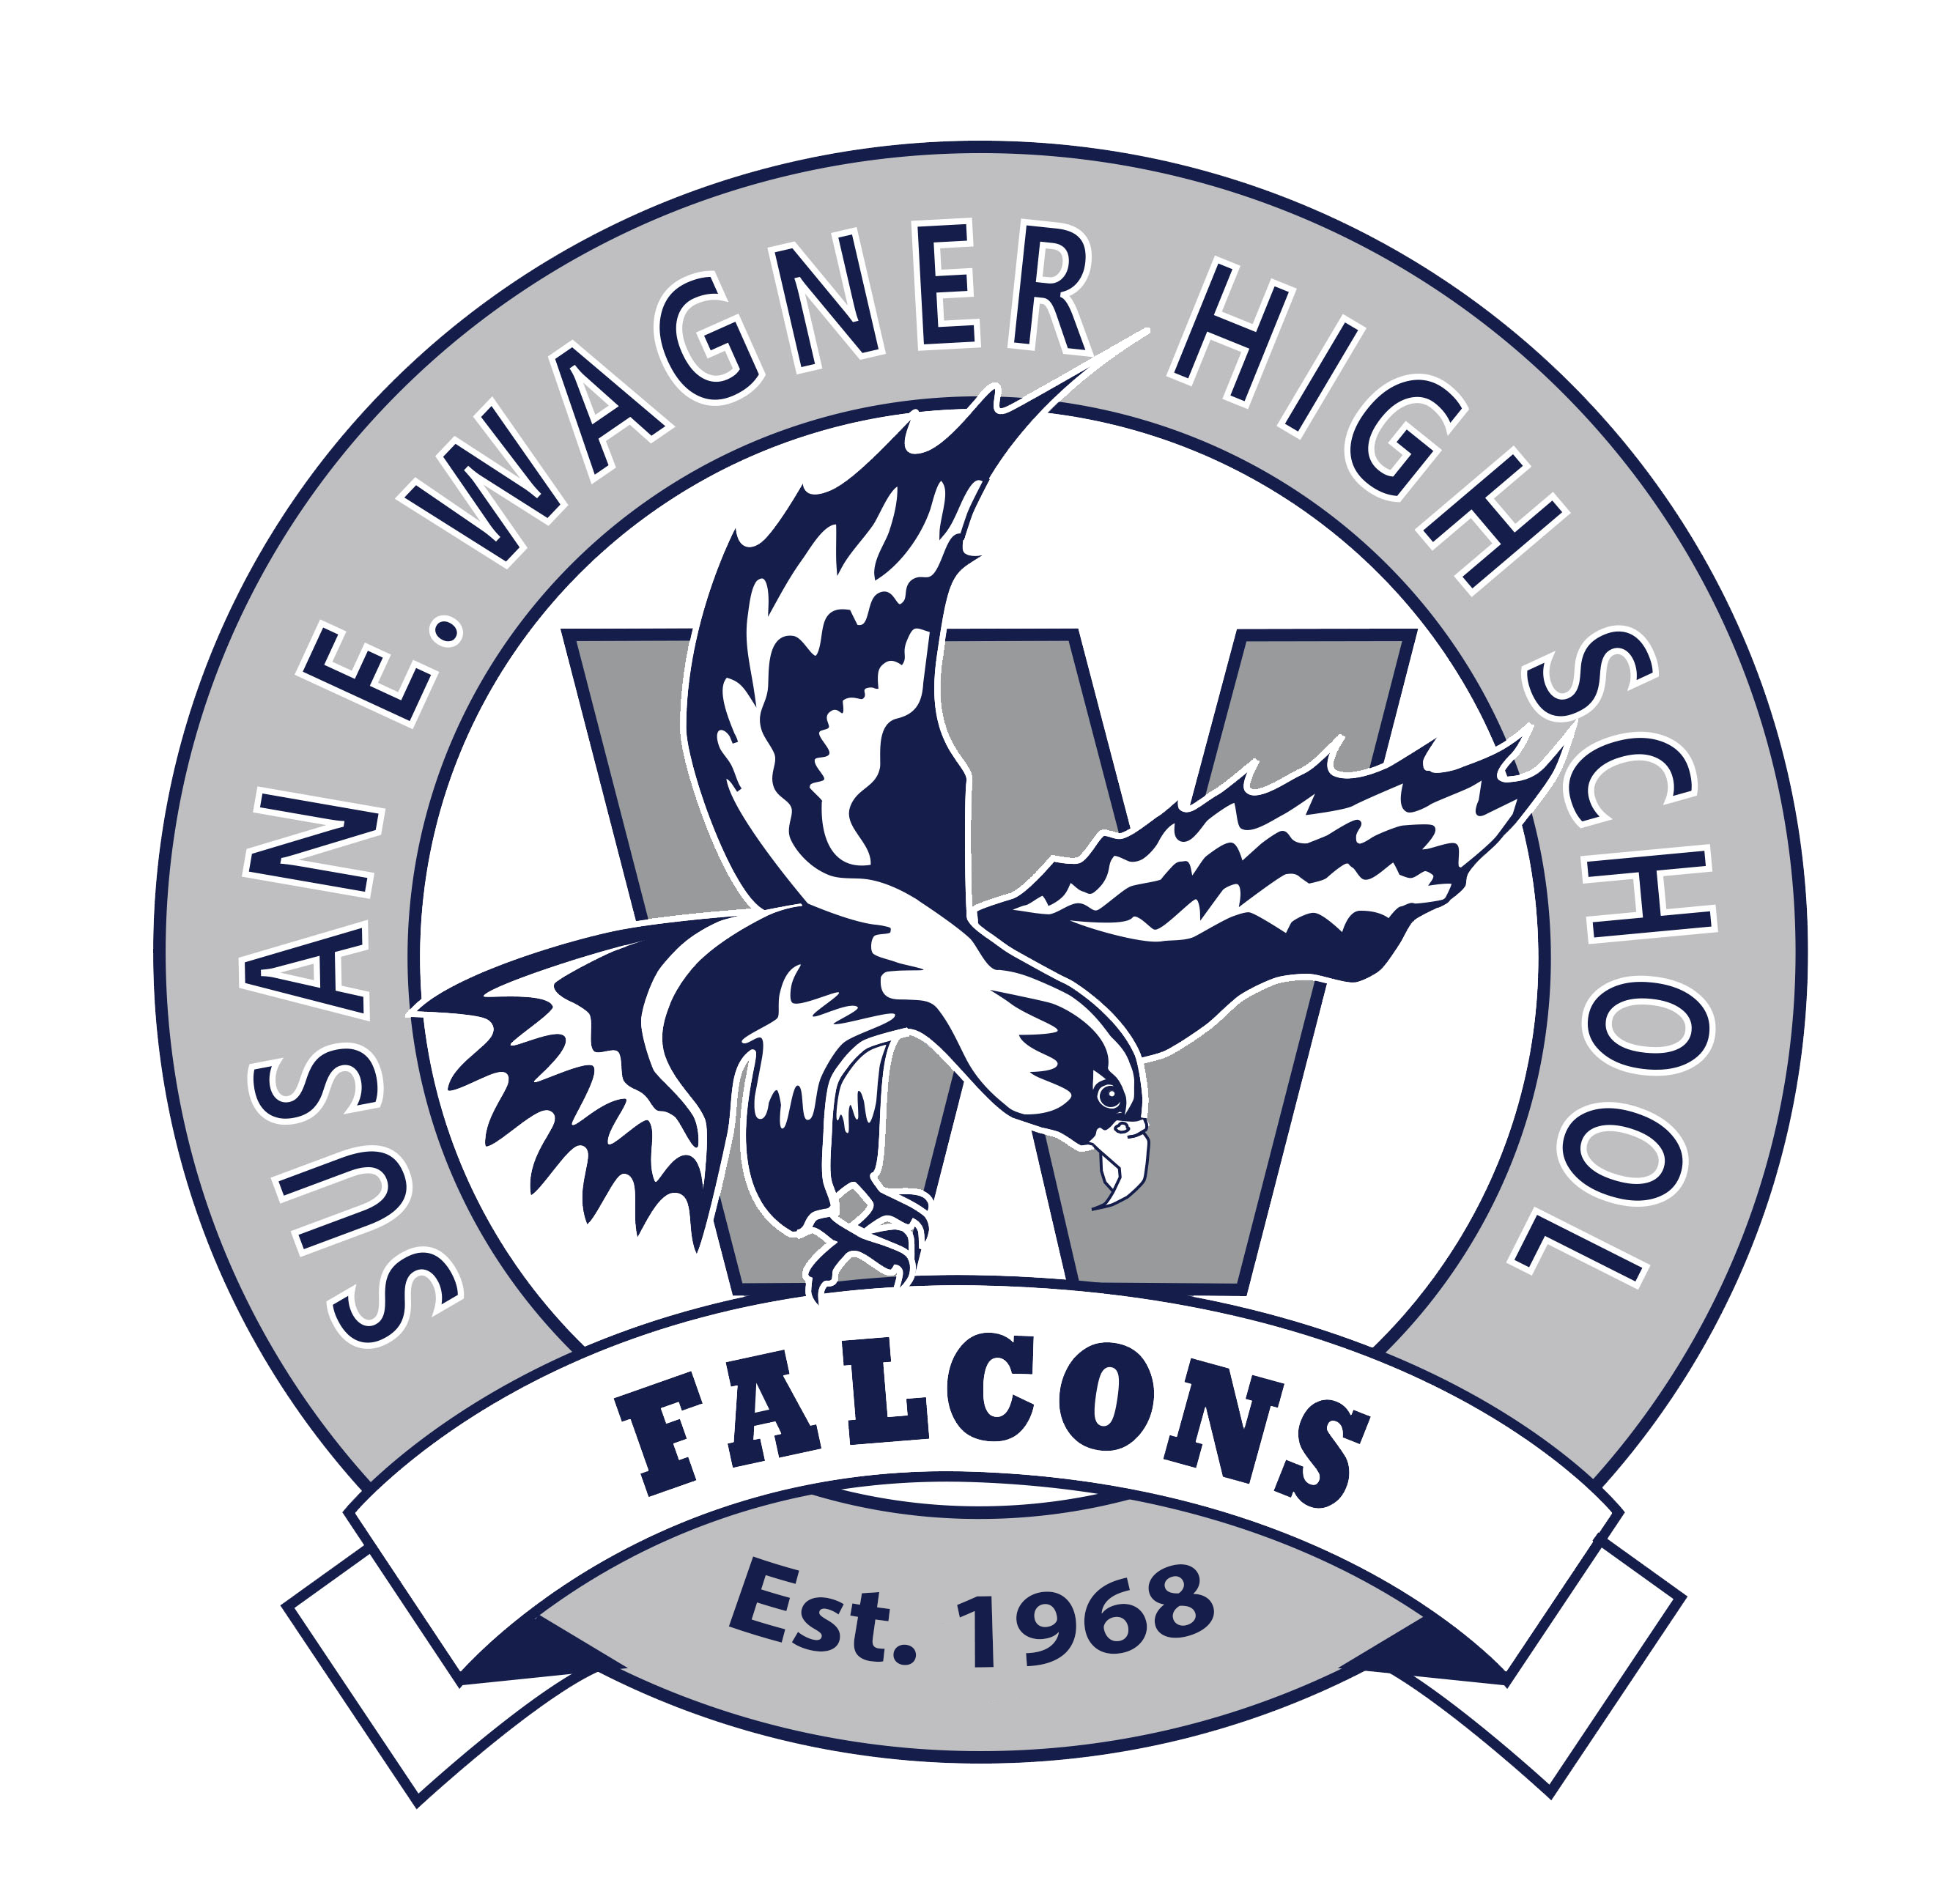 Susan E. Wagner High School